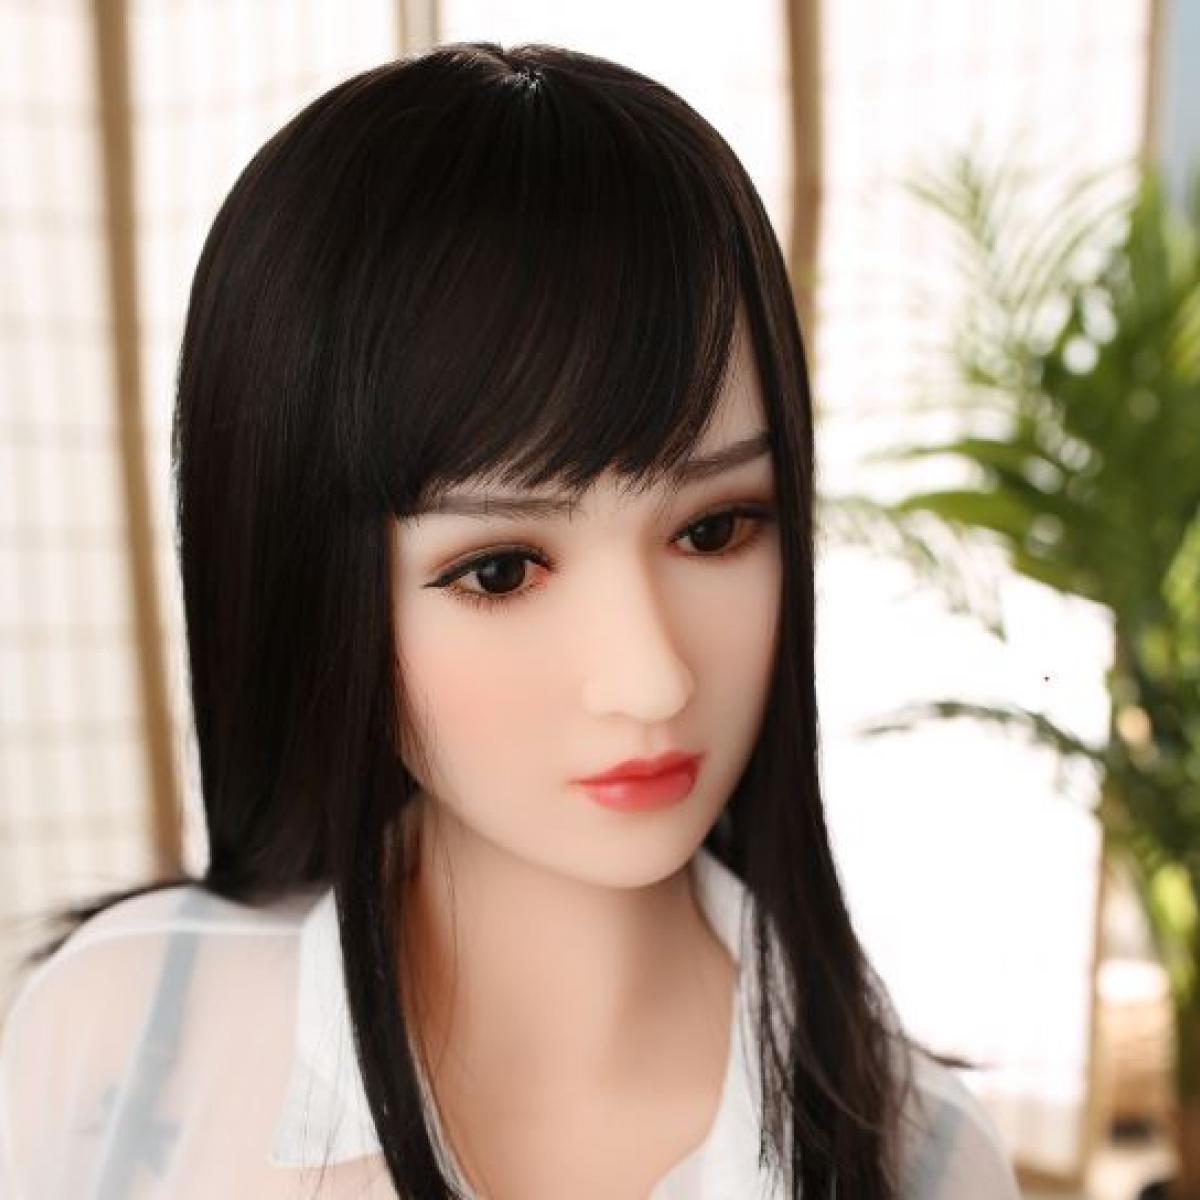 Neodoll Girlfriend Johanna - Sex Doll Head - M16 Compatible - Natural